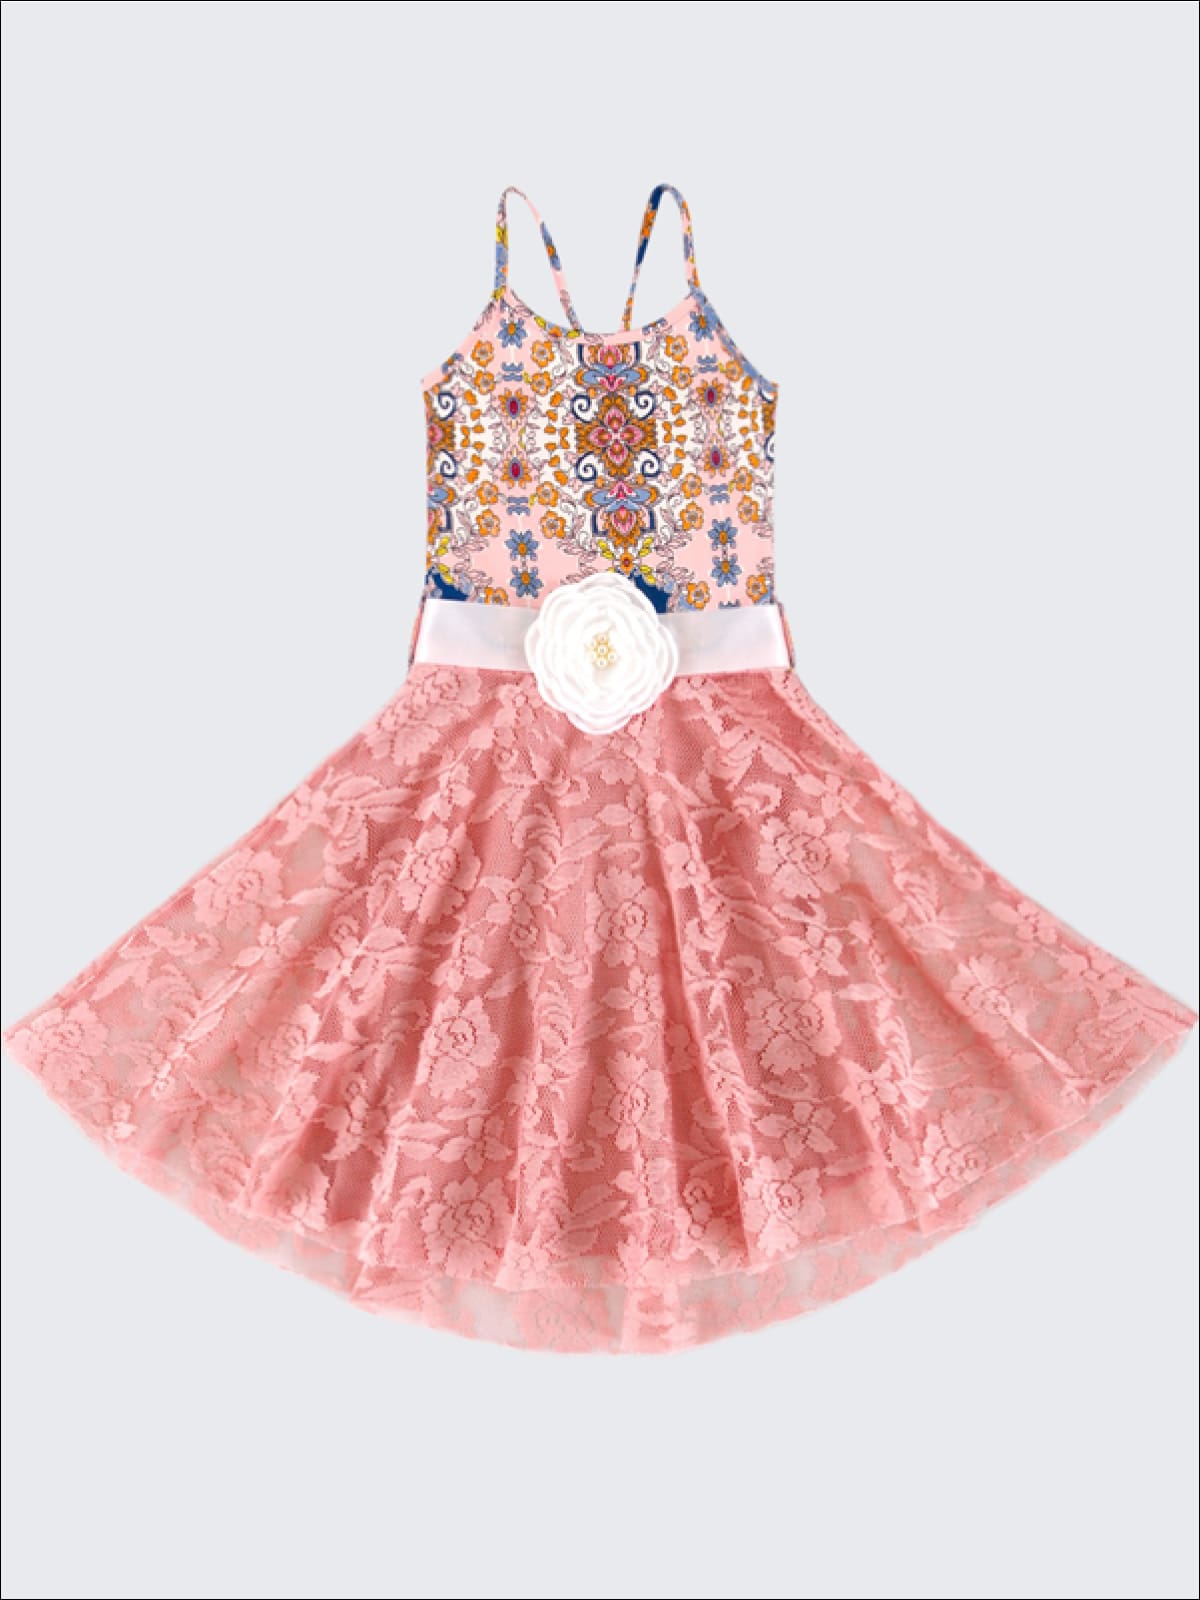 Girls Pink & Blue Medallion Print Hi-Low Pink Lace Circle Skirt Twirl Dress with Flower Belt - 2T/3T / Pink & Blue - Girls Spring Dressy